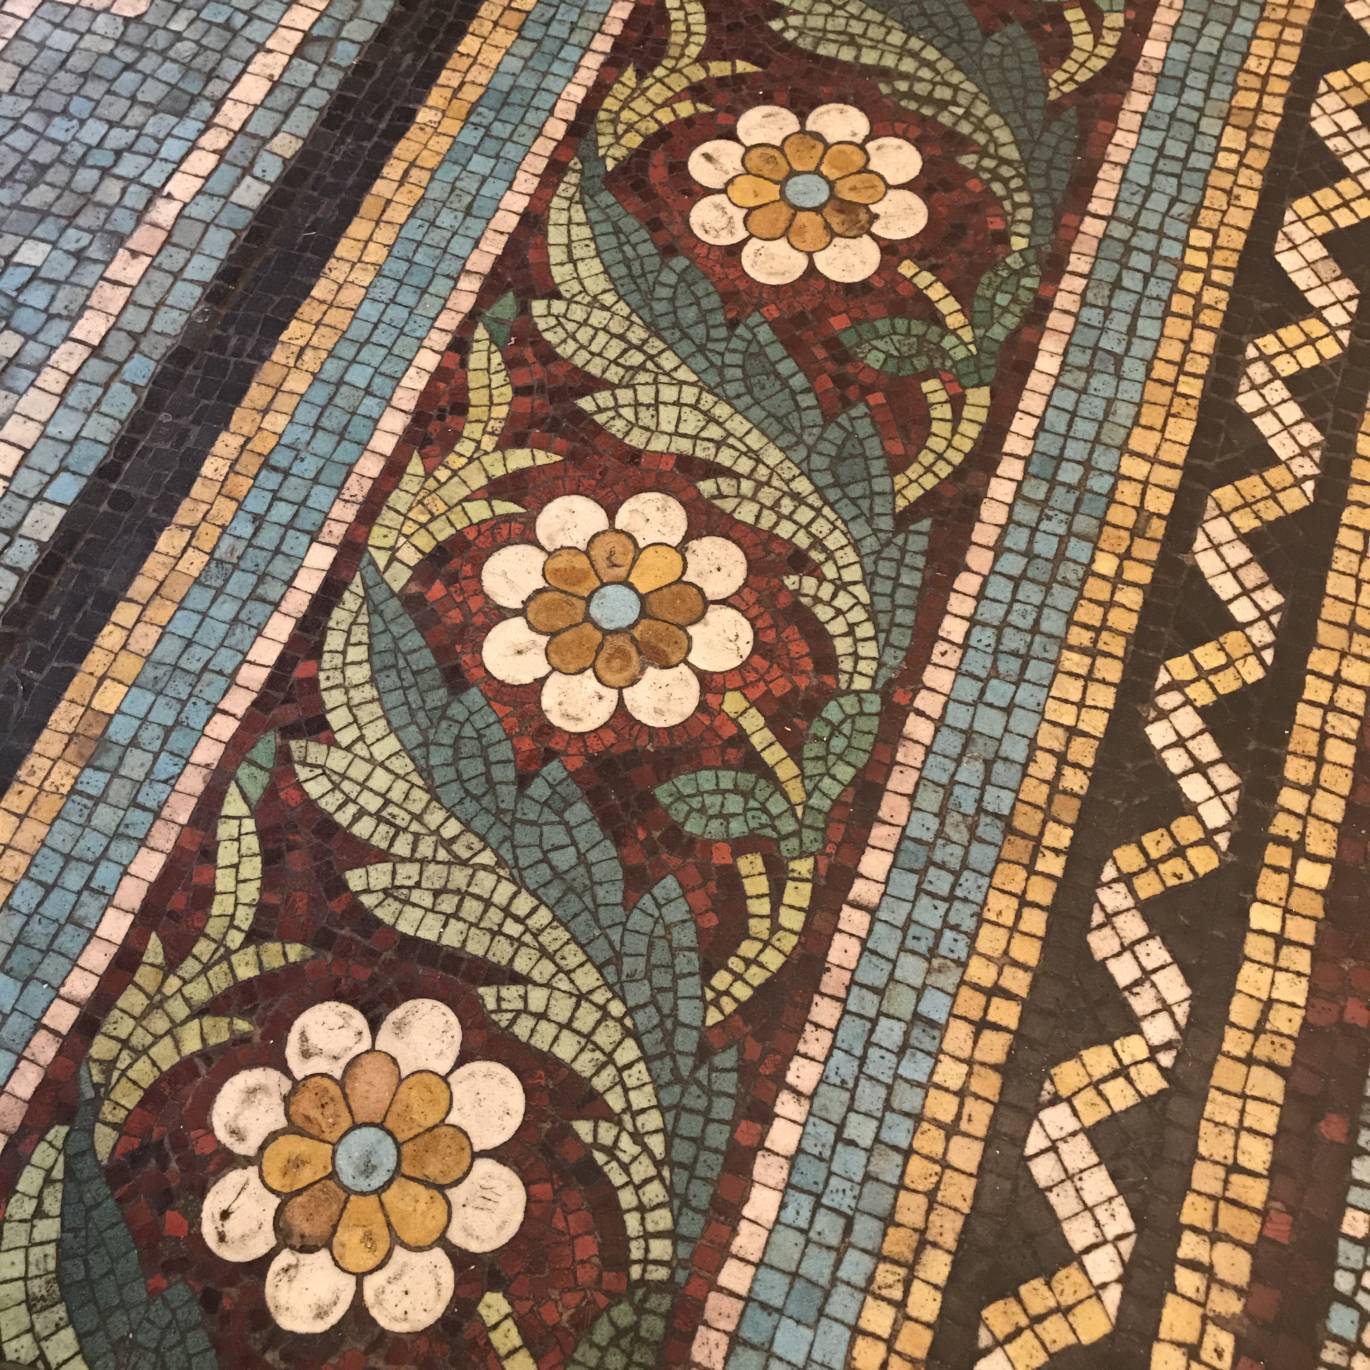 Battersea Arts Centre mosaic floor tiles